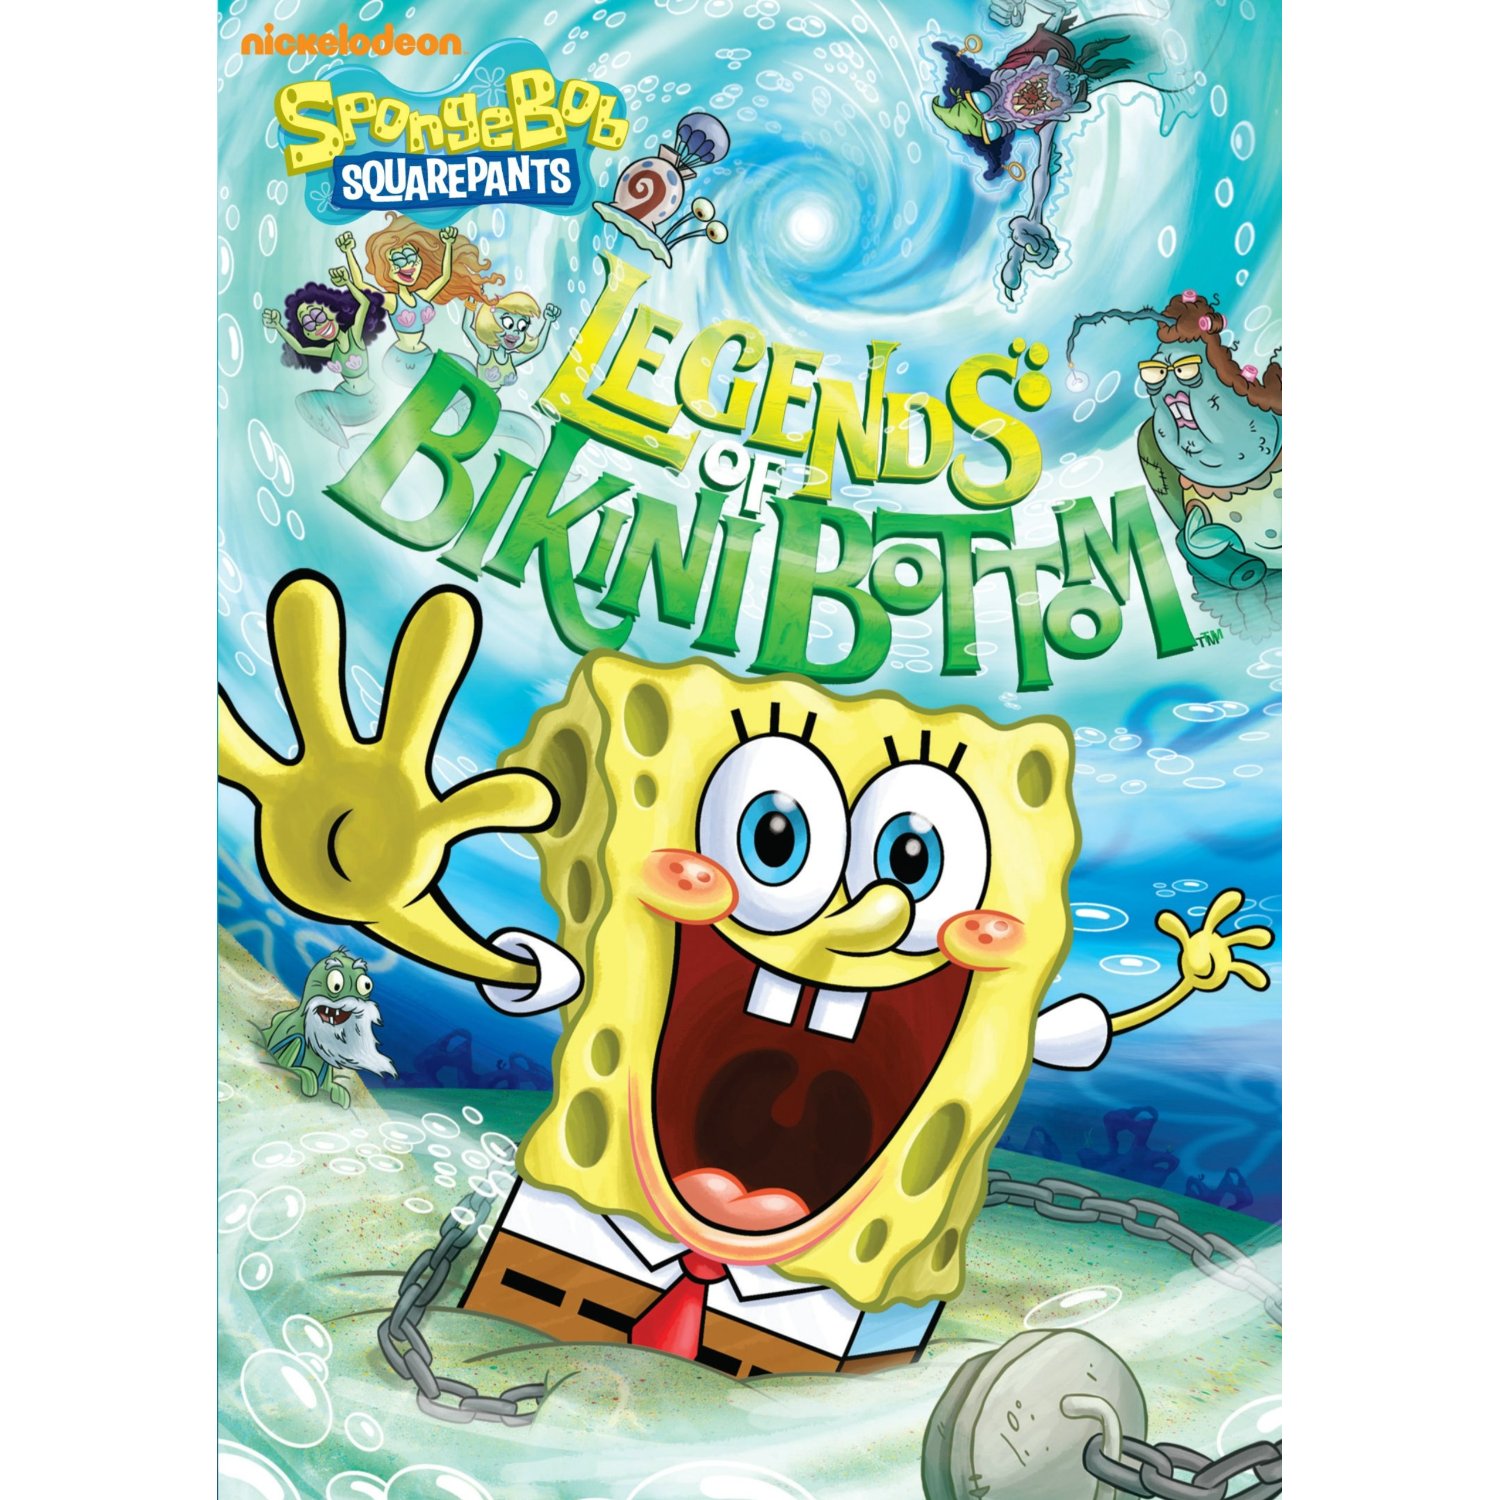 spongebob squarepants episodes 2010